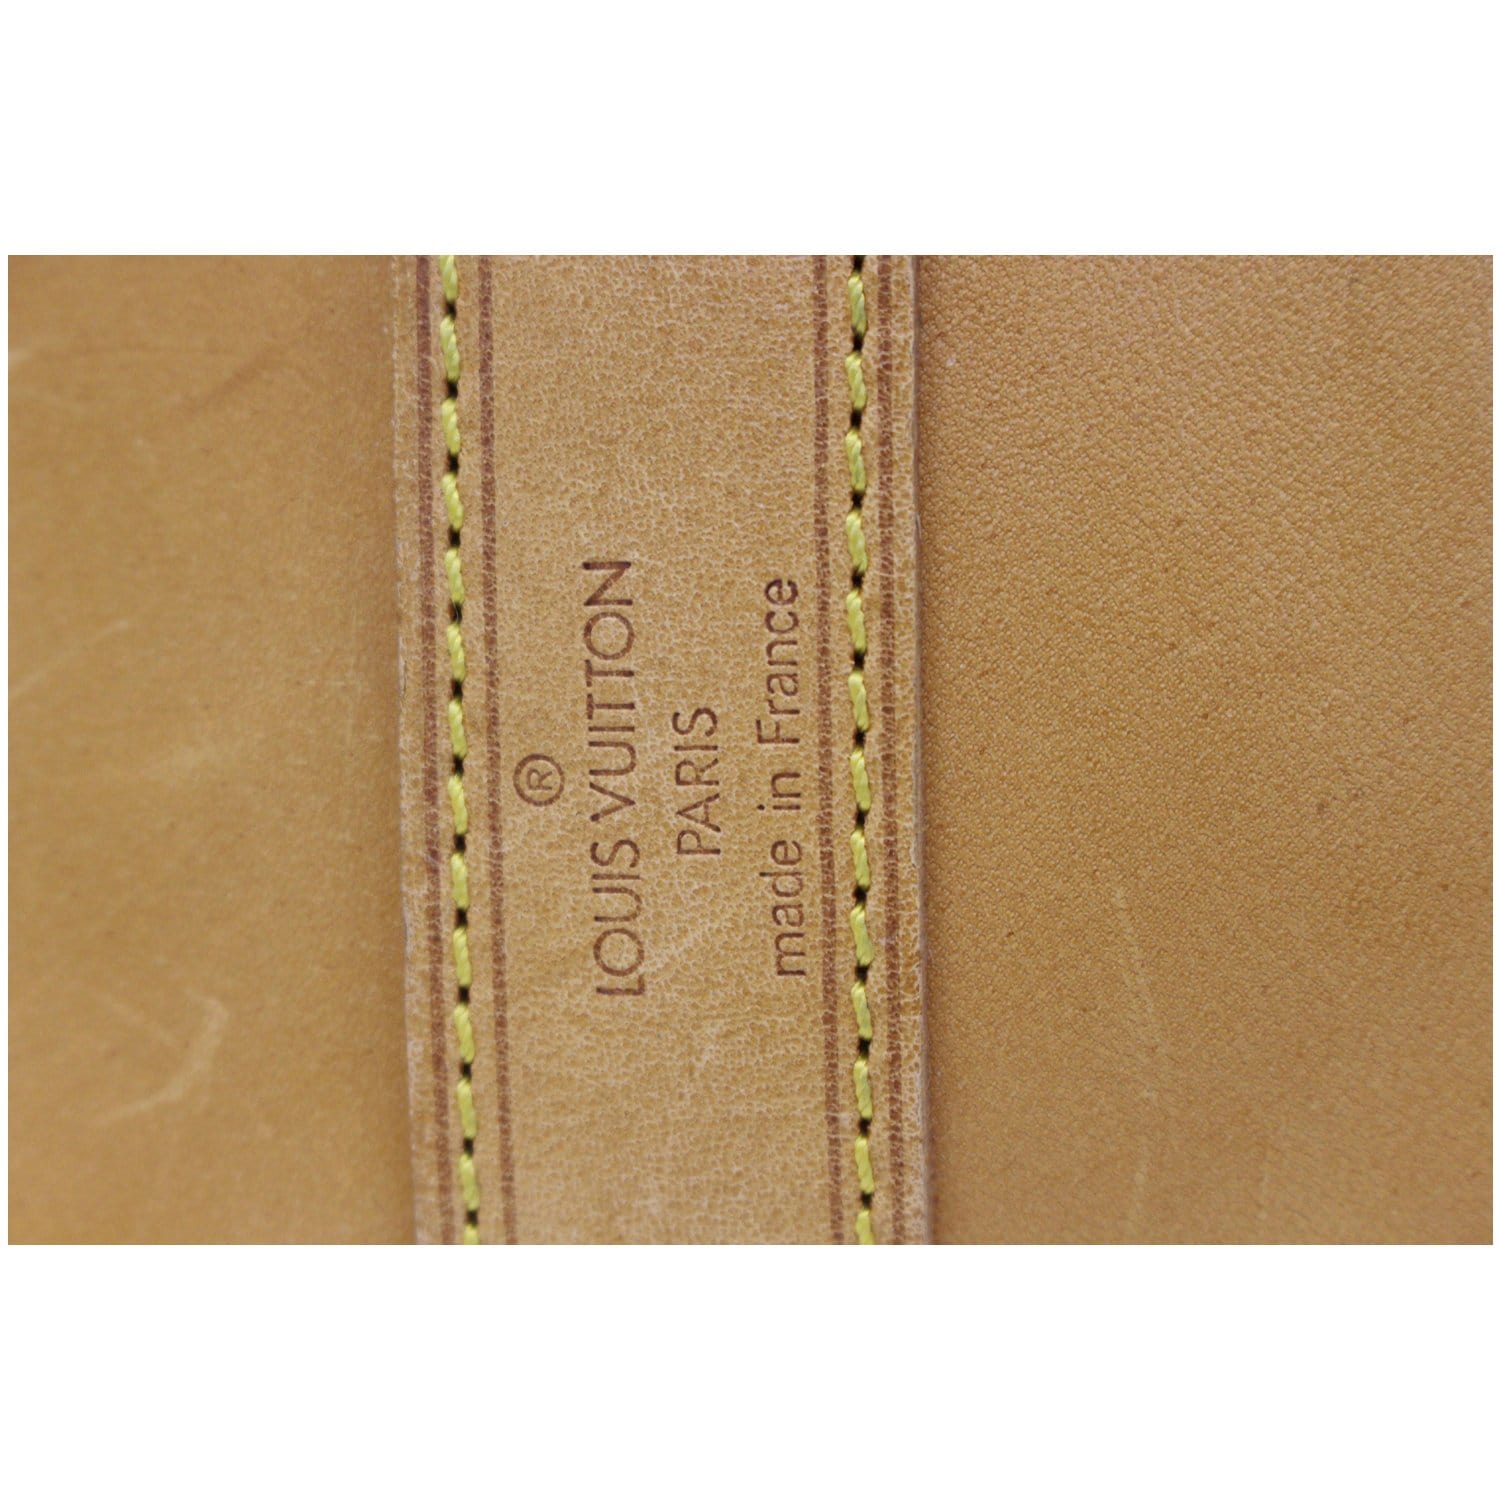 Louis Vuitton Monogram Randonnee GM Leather Fabric Brown Shoulder bag 697